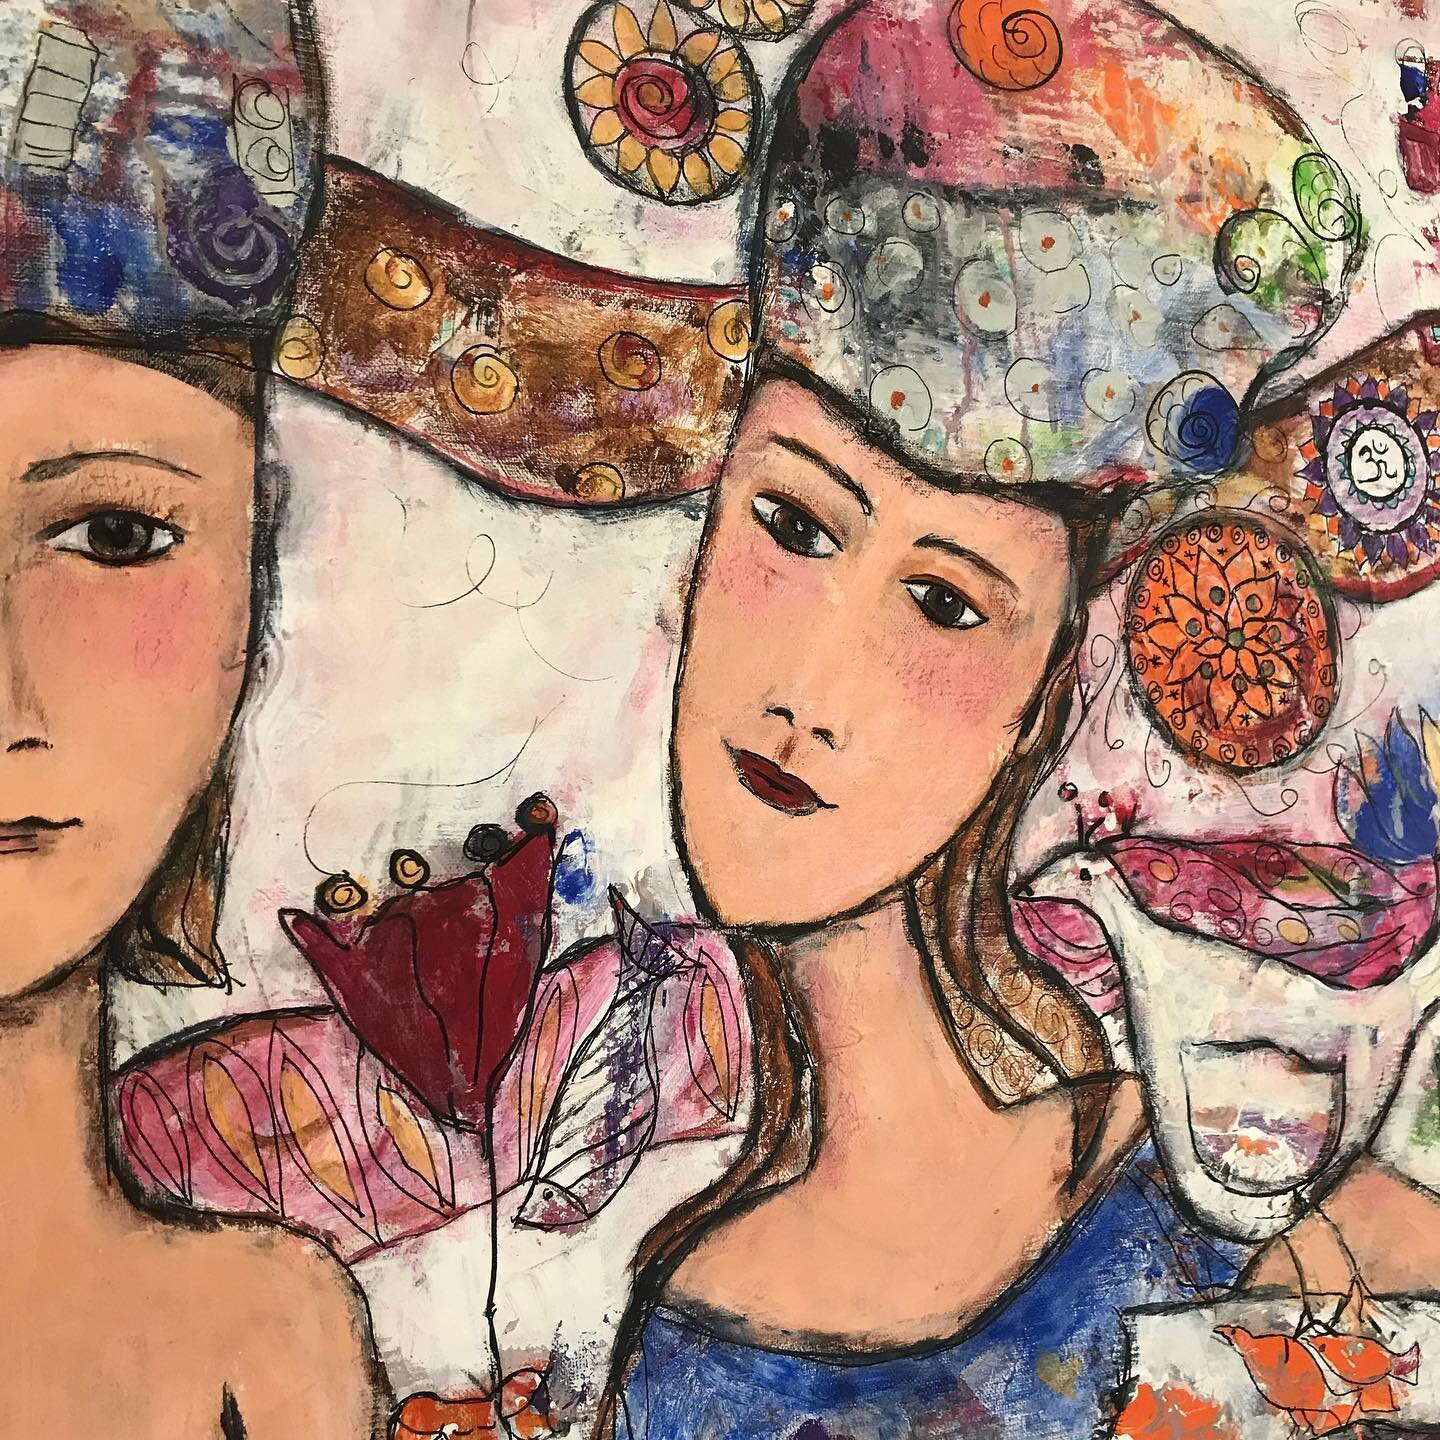 Détails du nouveau tableau &laquo;&nbsp;Friends&nbsp;&raquo; 🌼  80x80 cm.  #paintingfriends#staygulf#artstudio #galeriedart #amitie #happy#love#peace#peacefulart